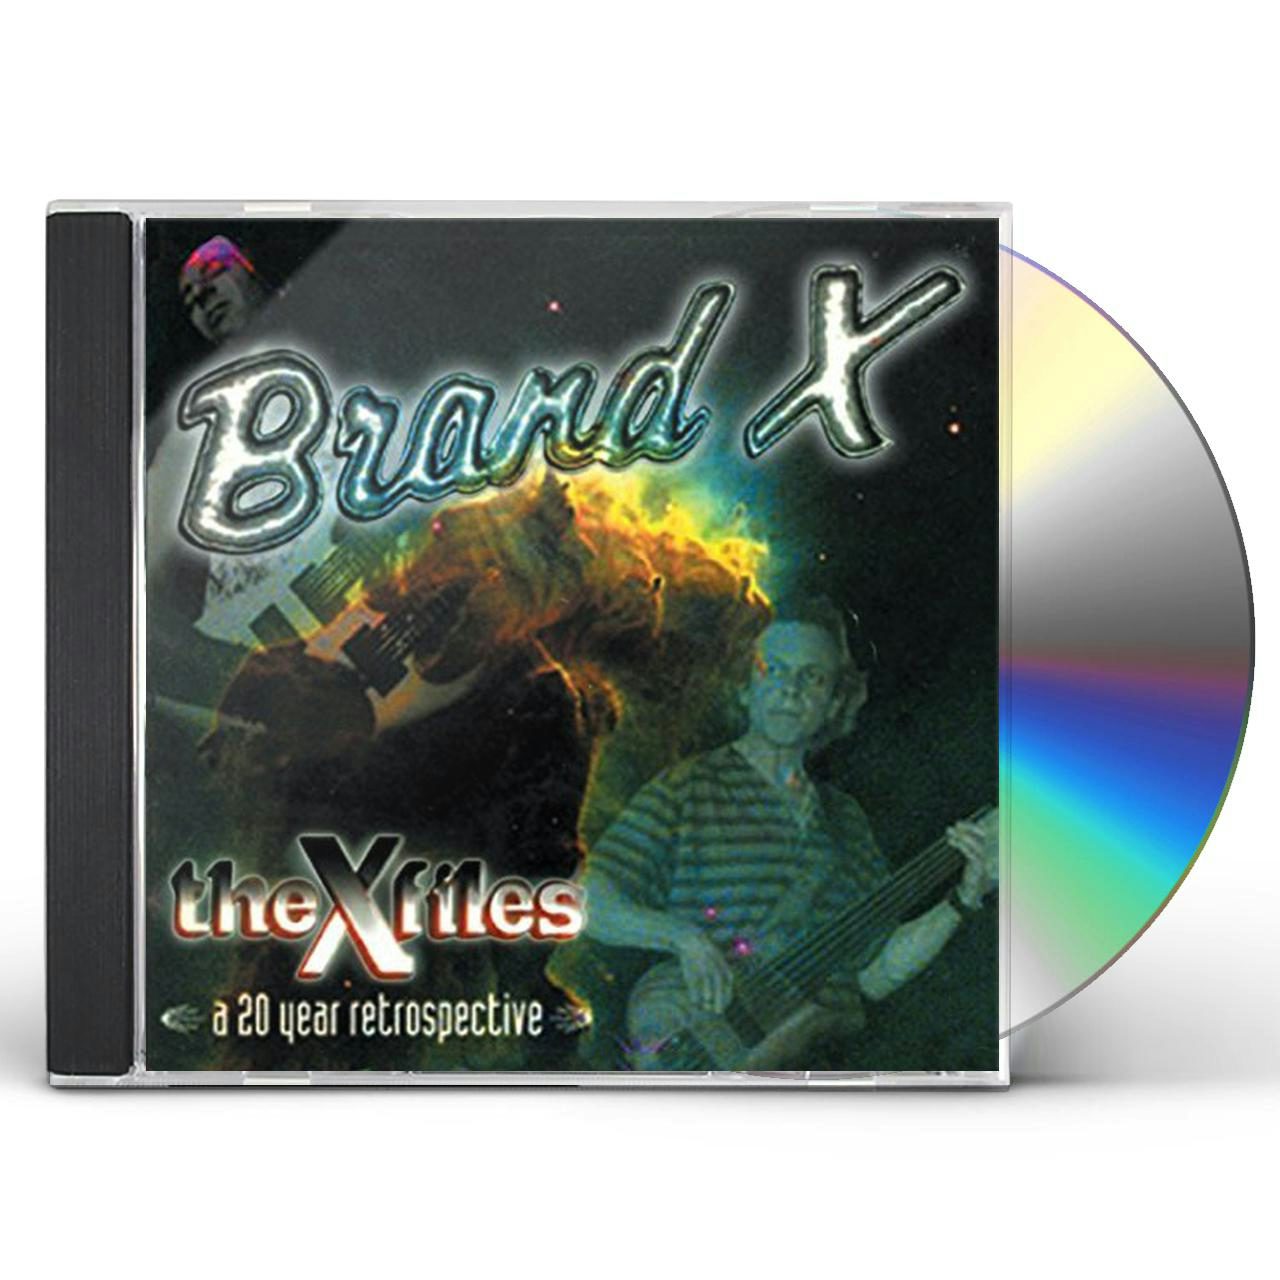 x files-a 20 year retrospective cd